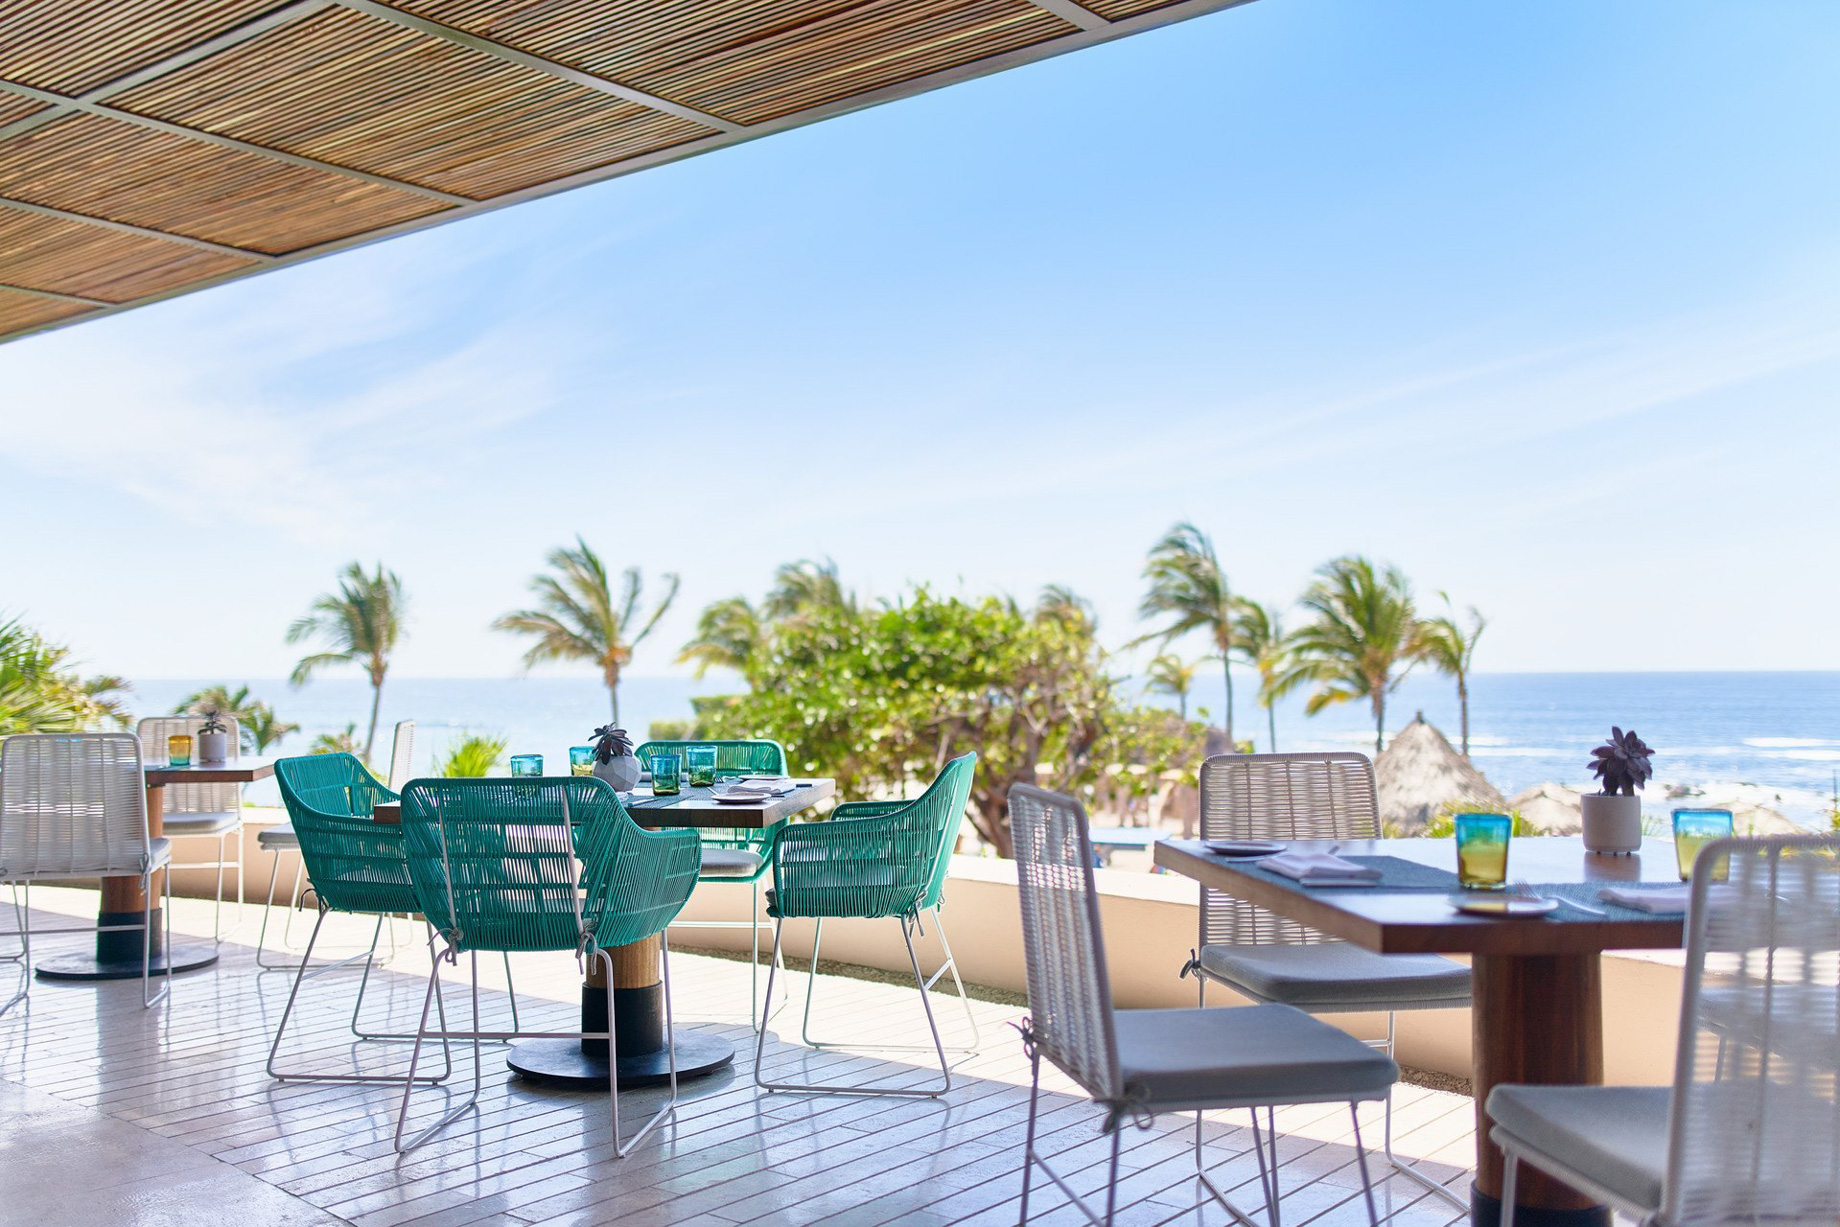 Four Seasons Resort Punta Mita – Nayarit, Mexico – Ocean View Restaurant Terrace